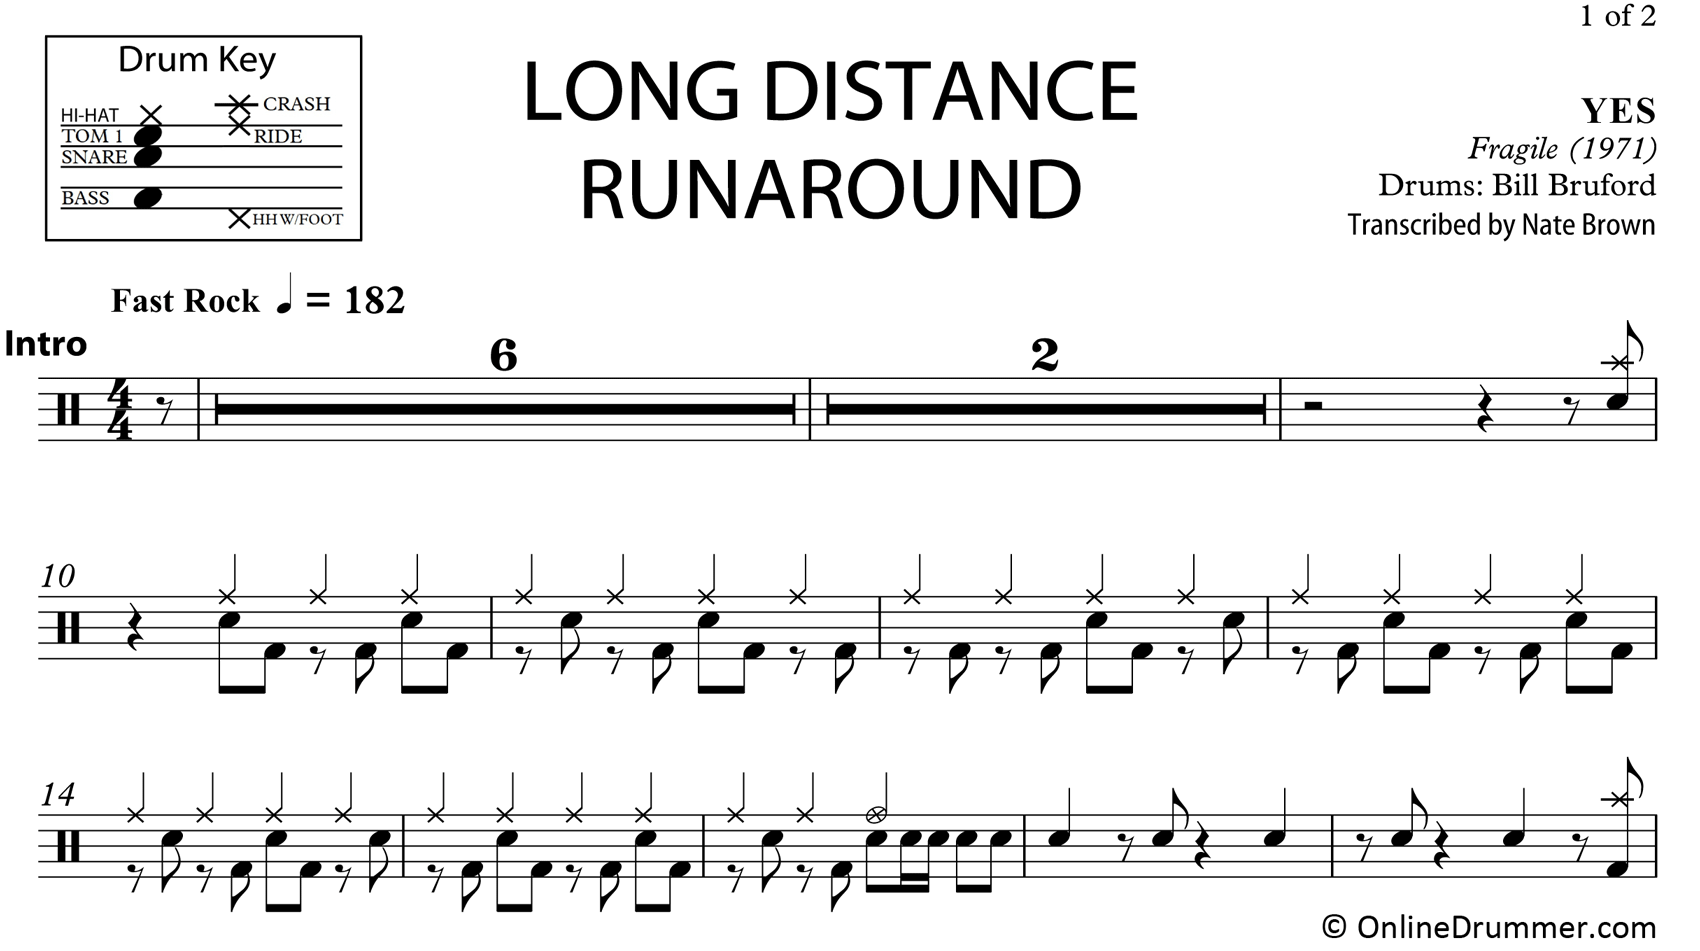 Long Distance Runaround - Yes - Drum Sheet Music